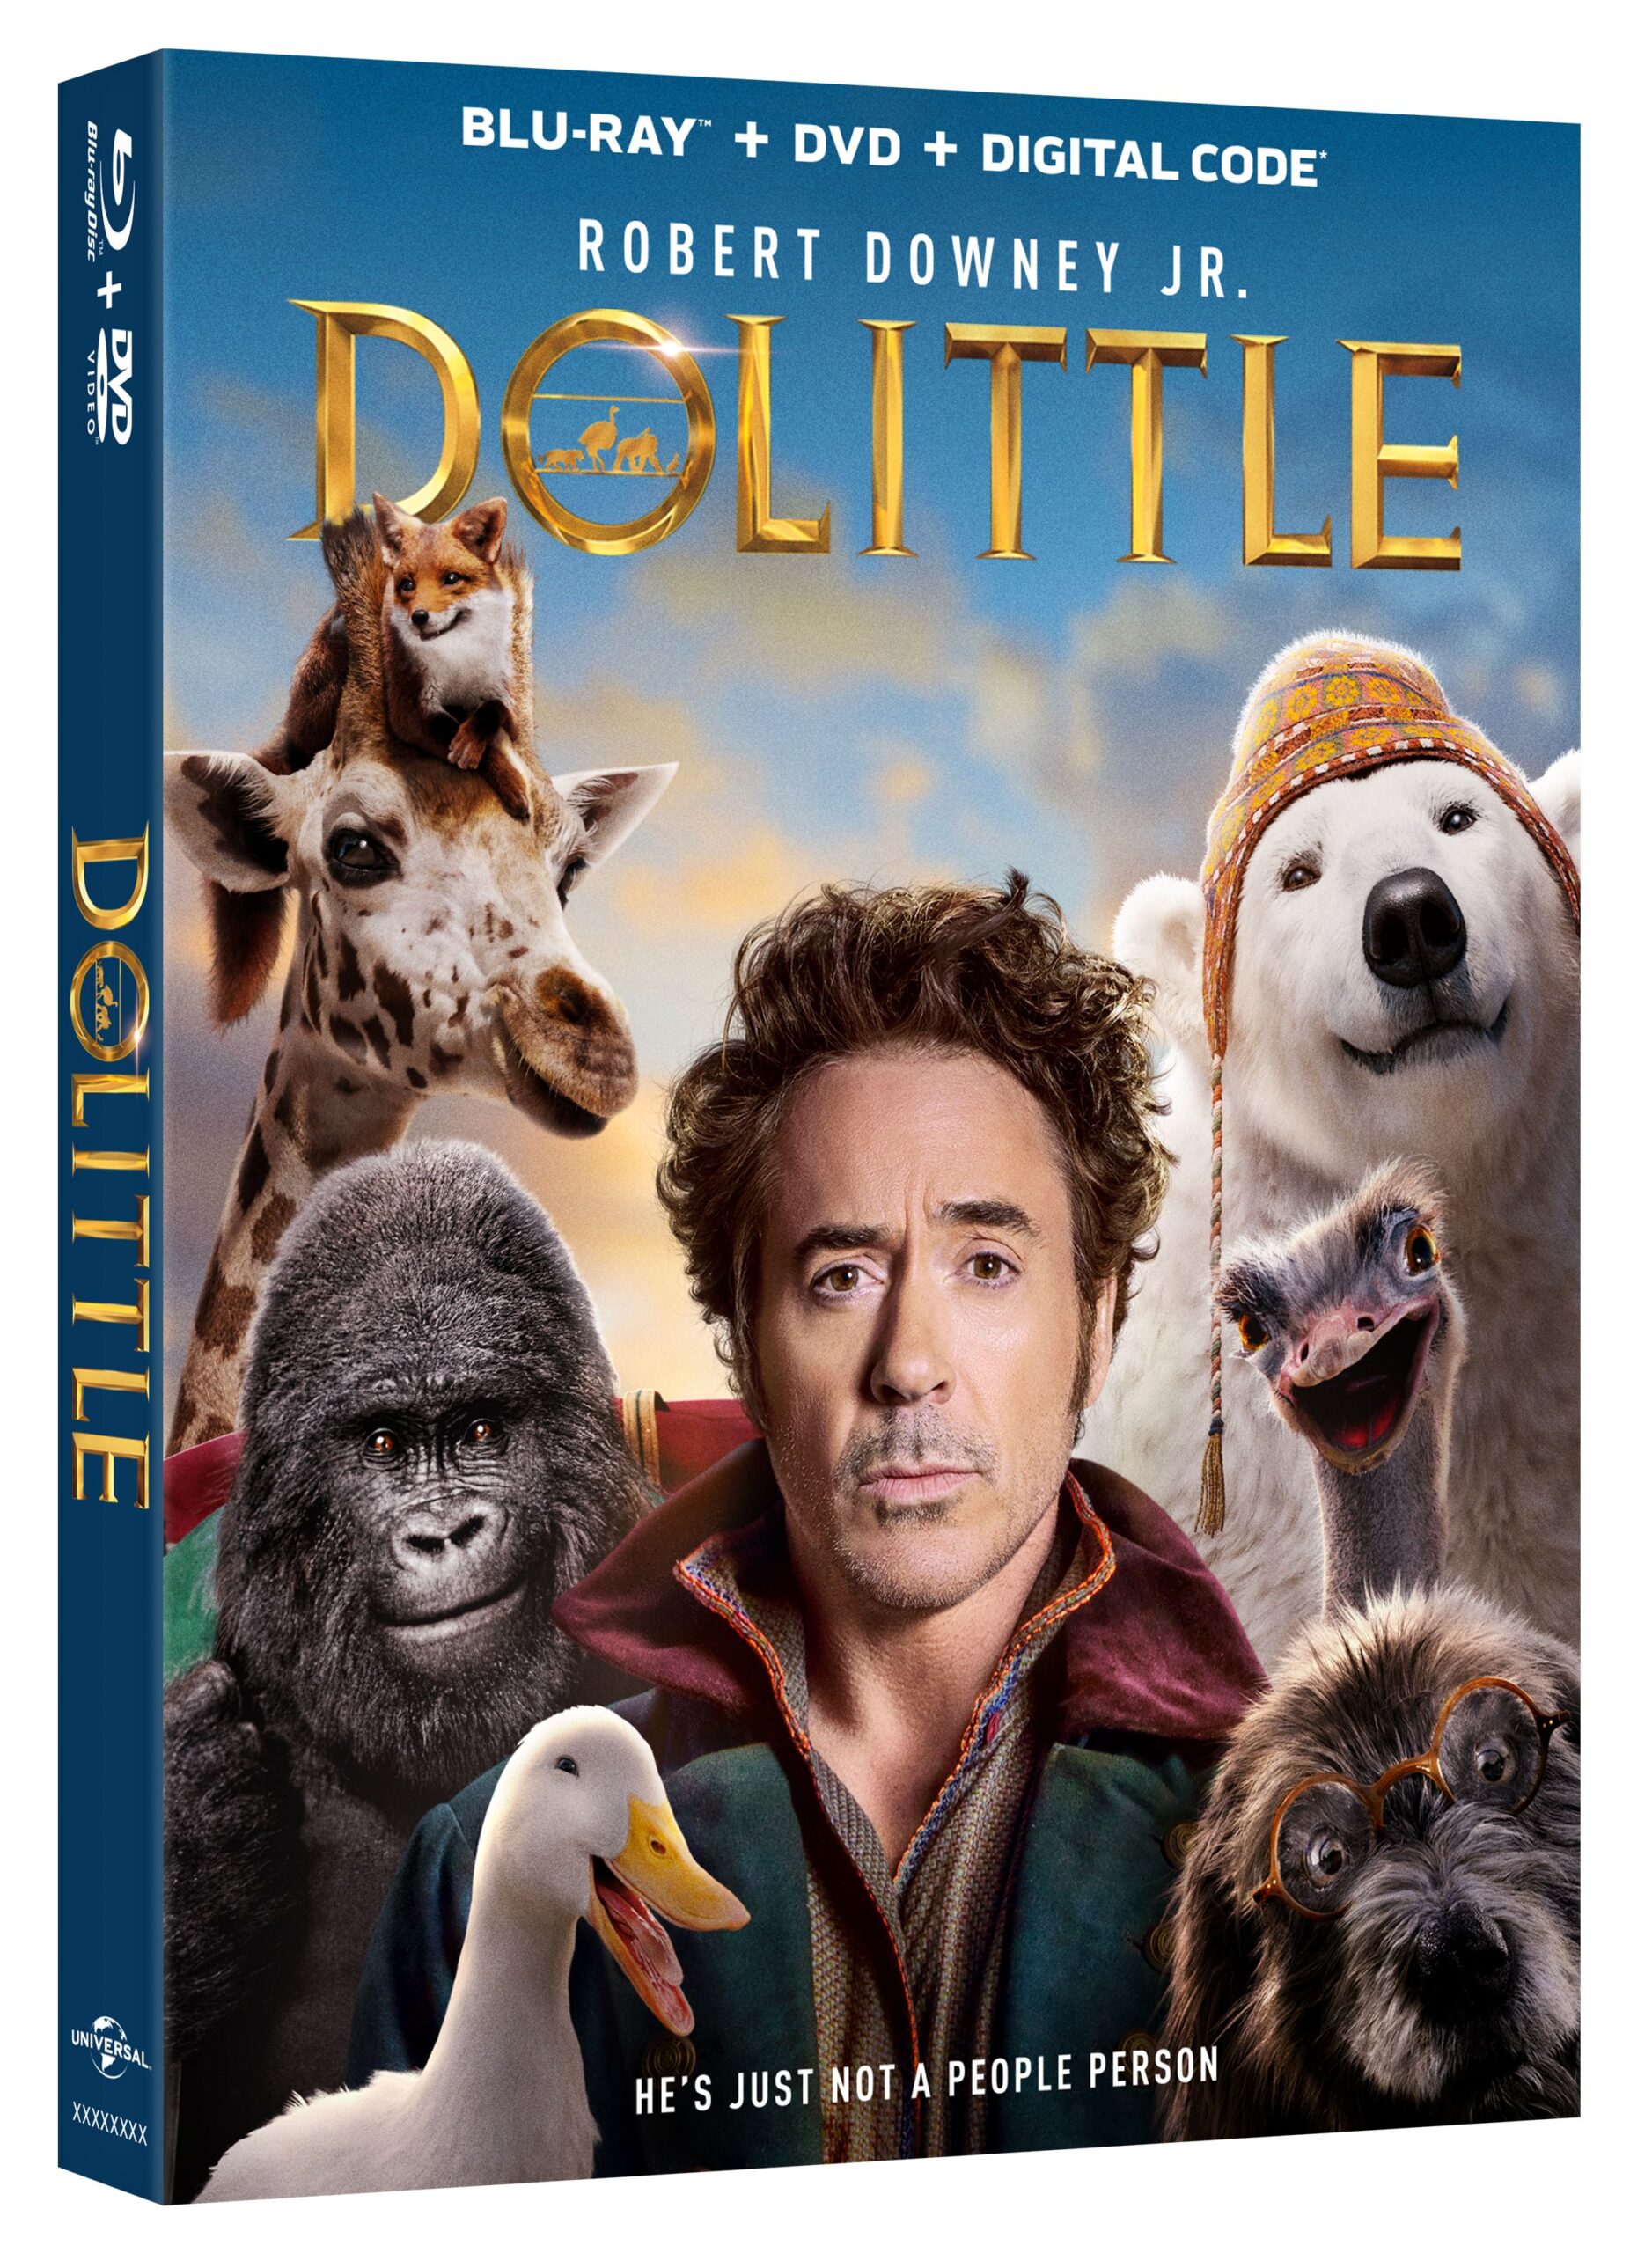 DOLITTLE Arrives on Digital March 24 & on 4K Ultra HD, Blu-ray, DVD & On Demand on April 7